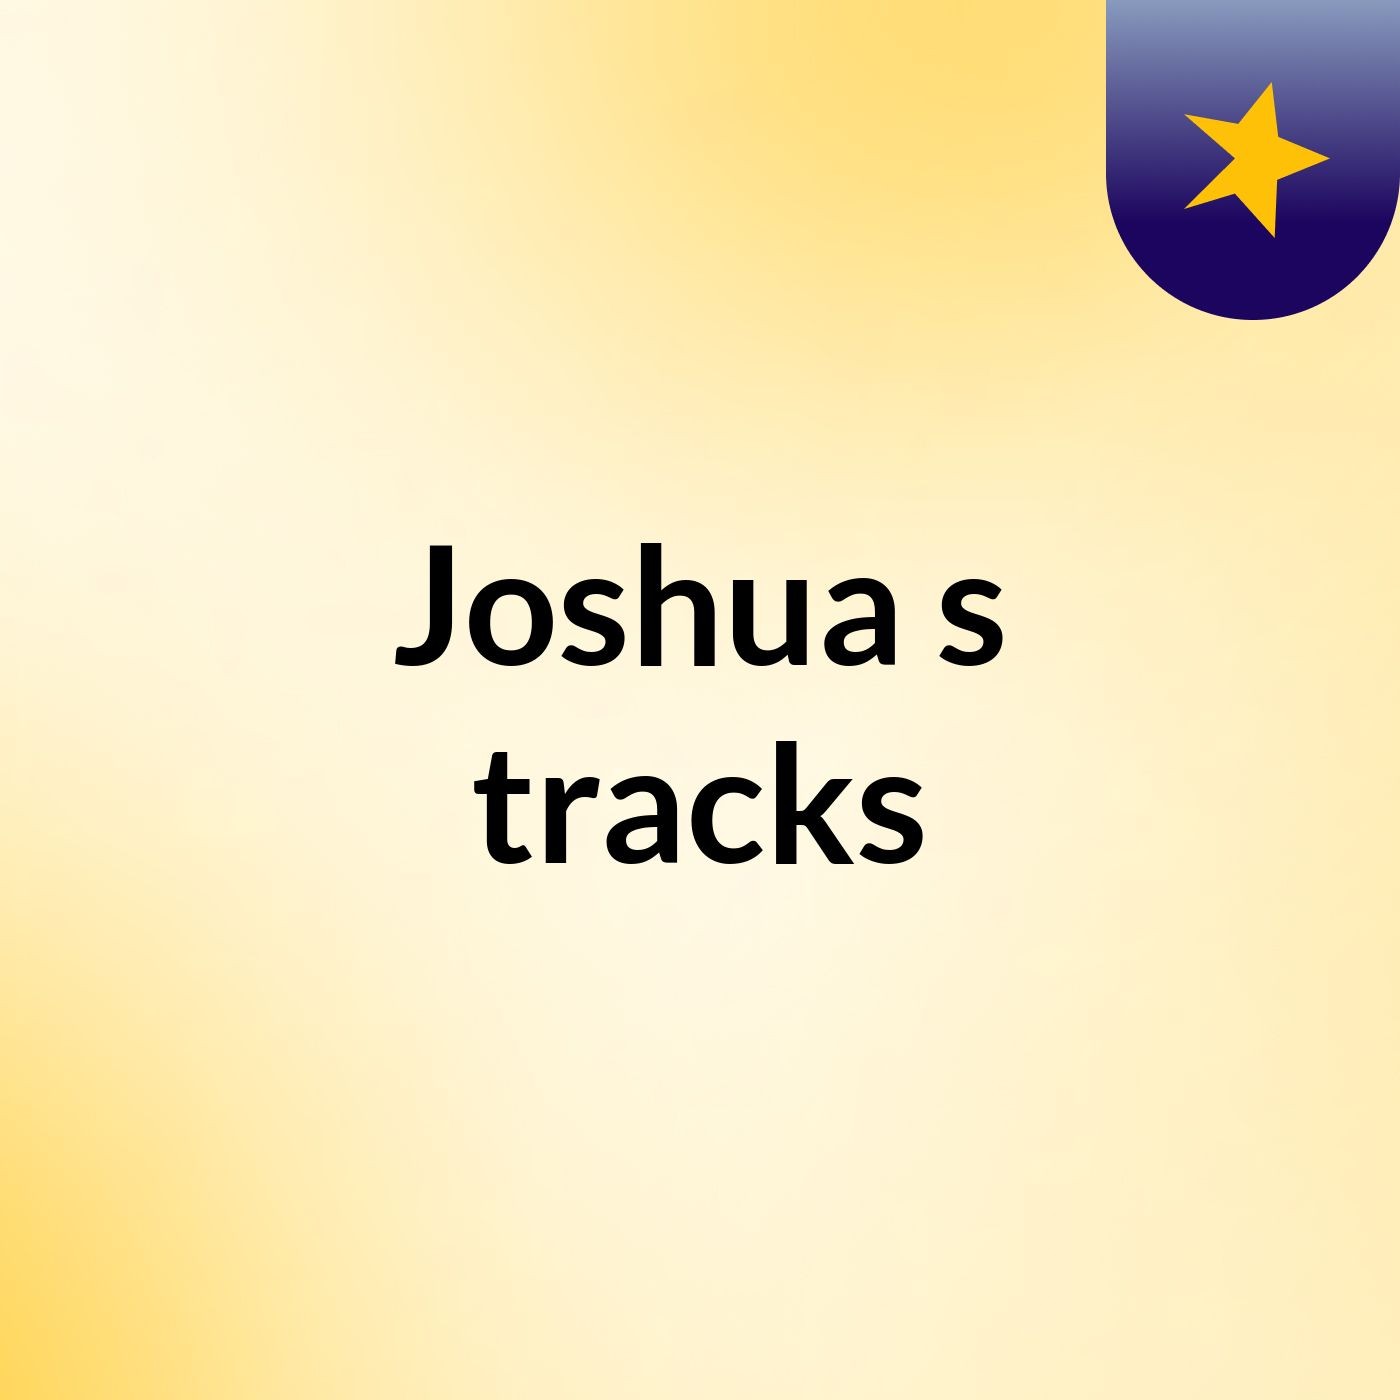 Joshua's tracks